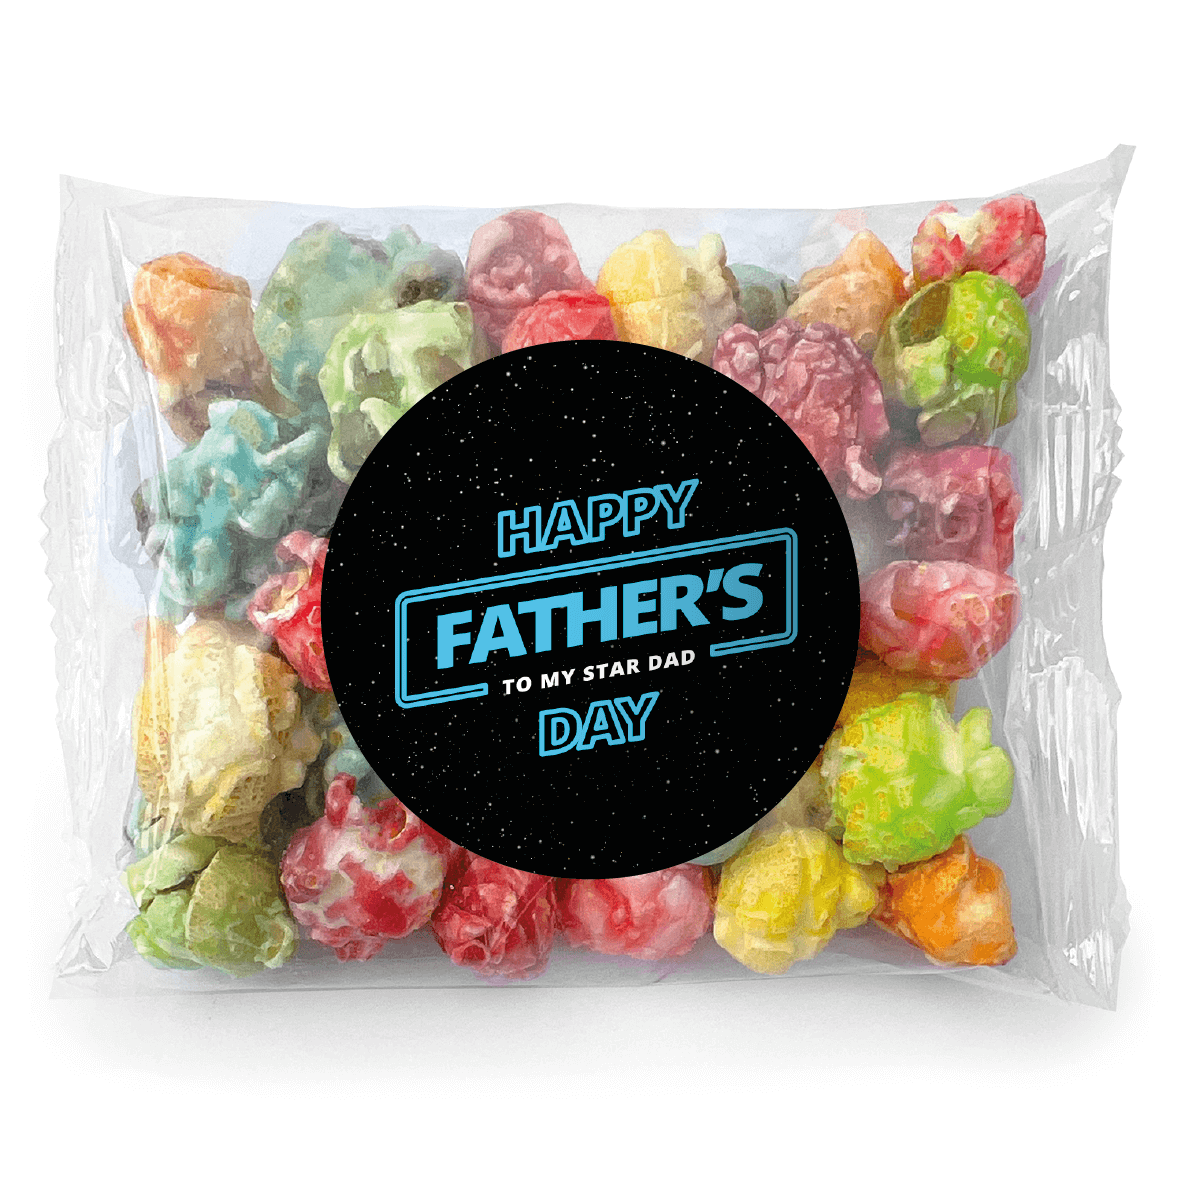 Shop for Galaxy Father's Day Rainbow Popcorn - Australia